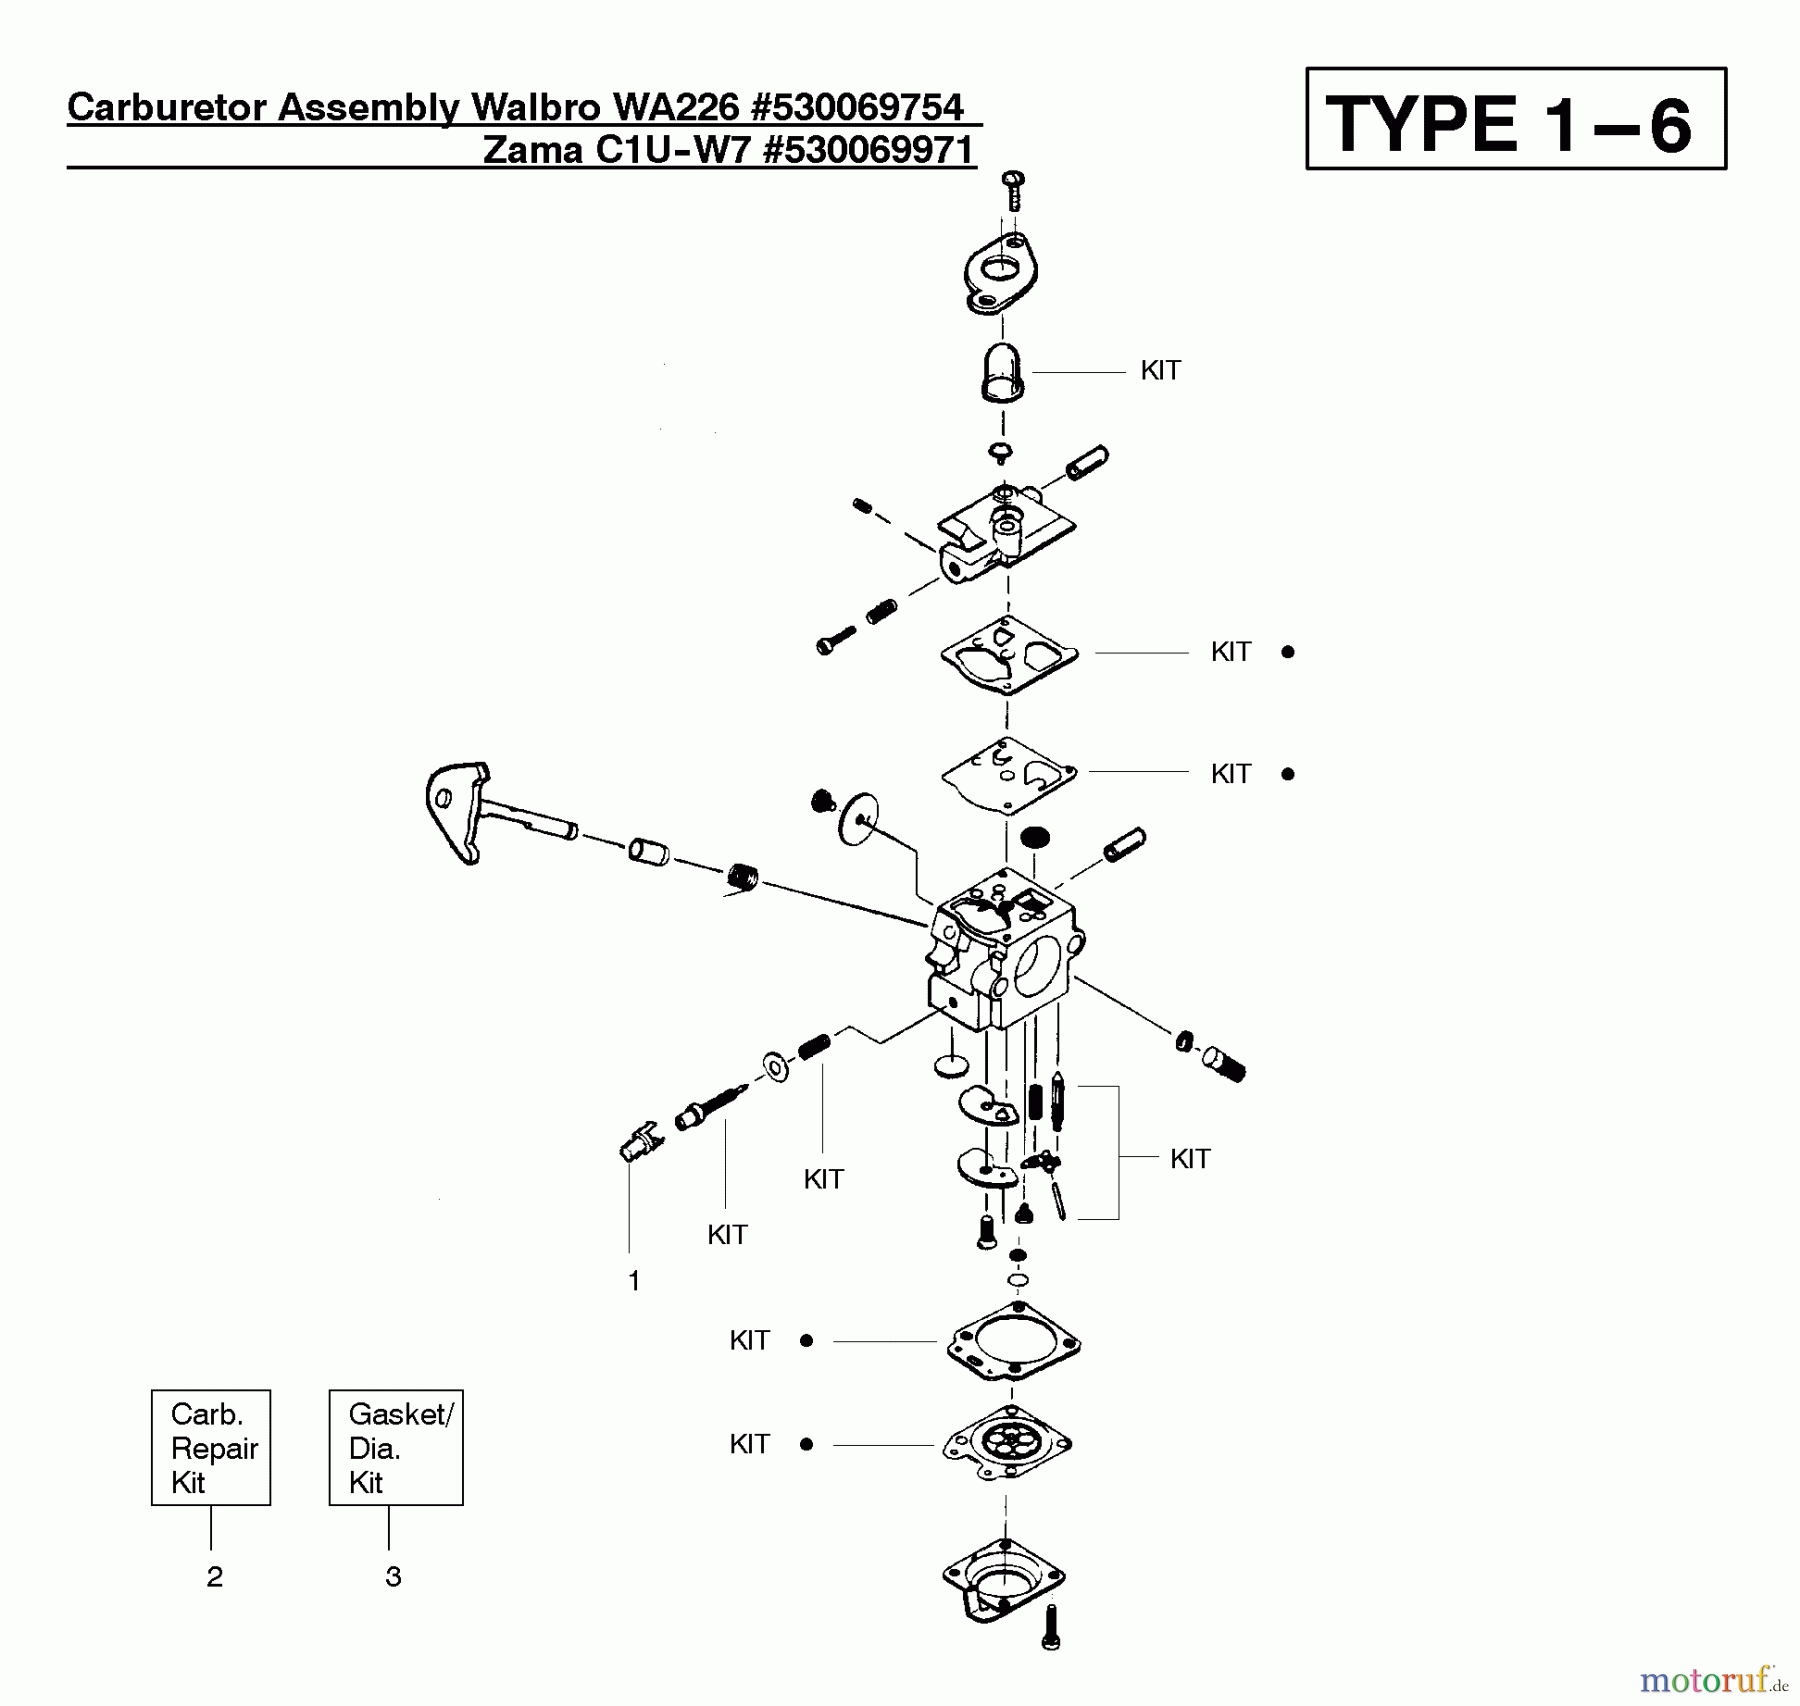  Poulan / Weed Eater Motorsensen, Trimmer XT600 (Type 1) - Weed Eater String Trimmer Carburetor Assembly (WT226) 530069754, (Zama C1U-W7) 530069971